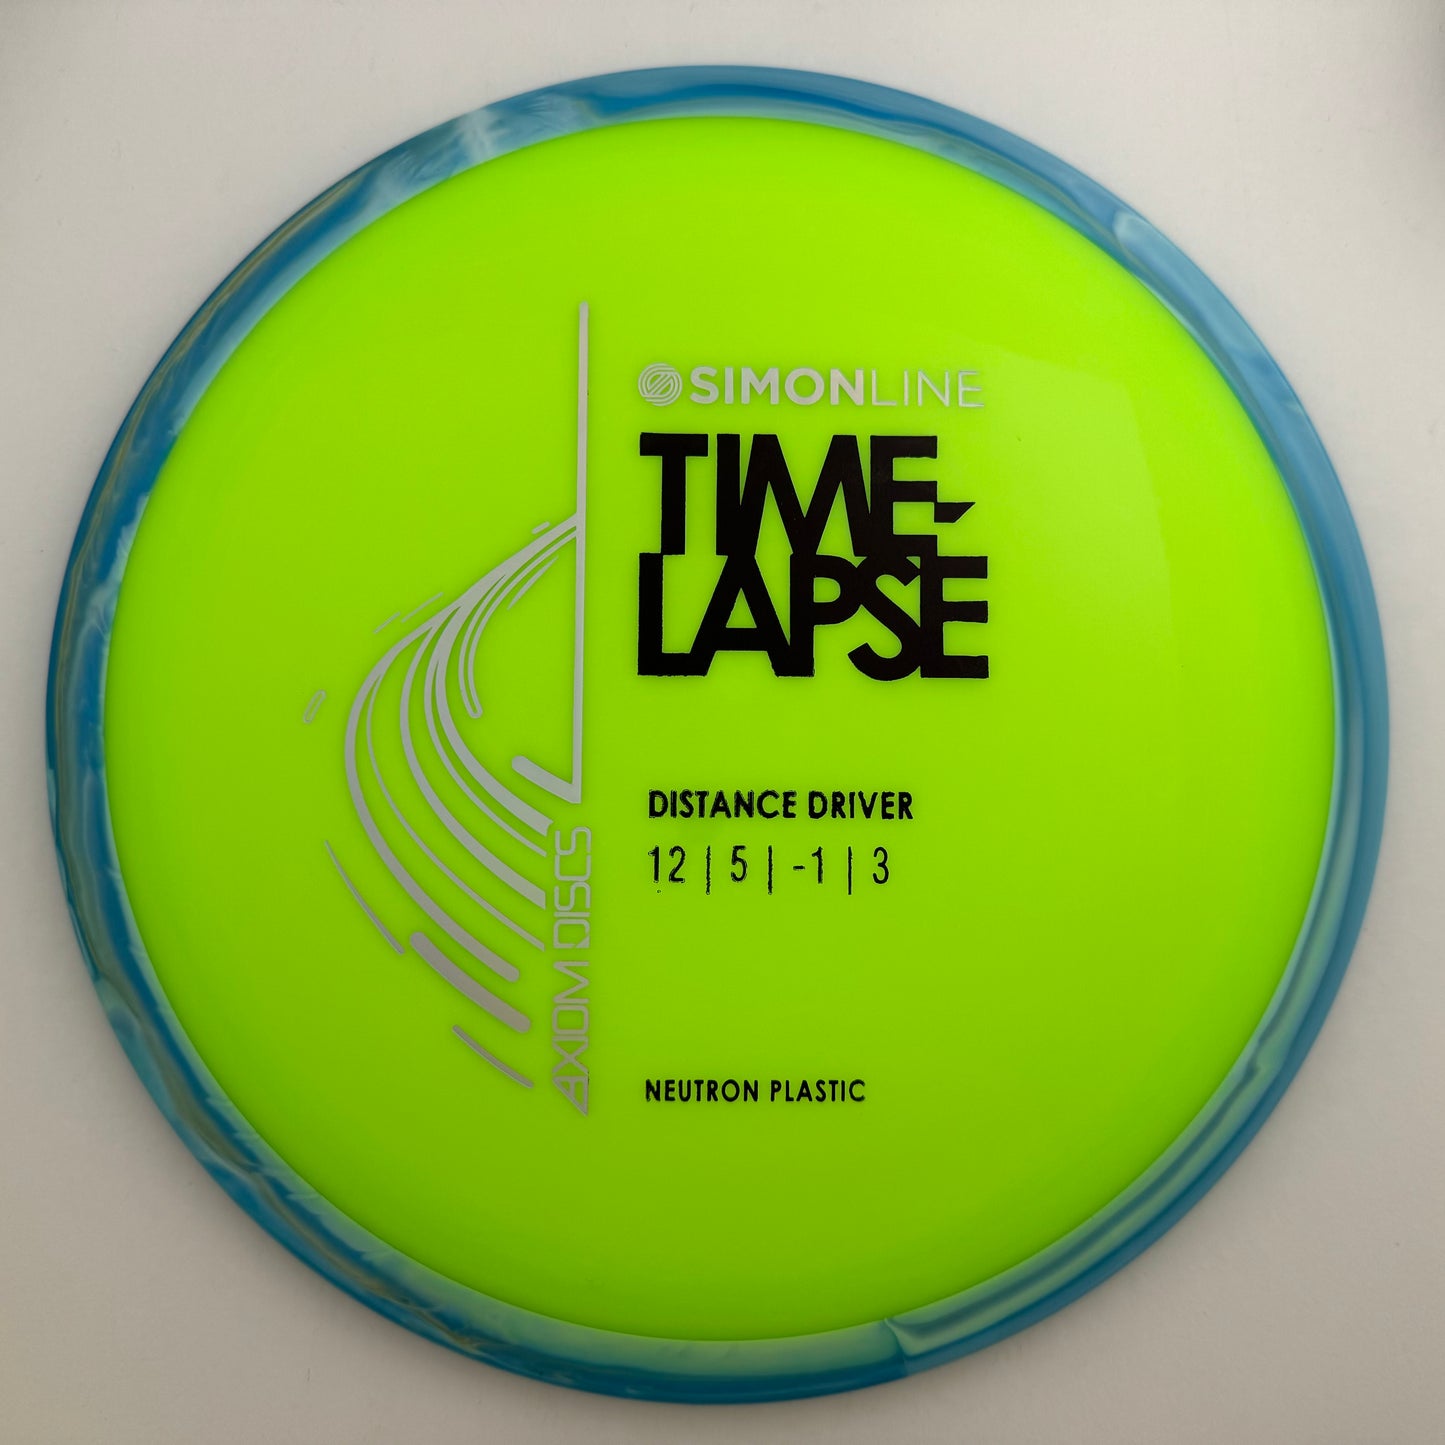 Simon Line Time-Lapse